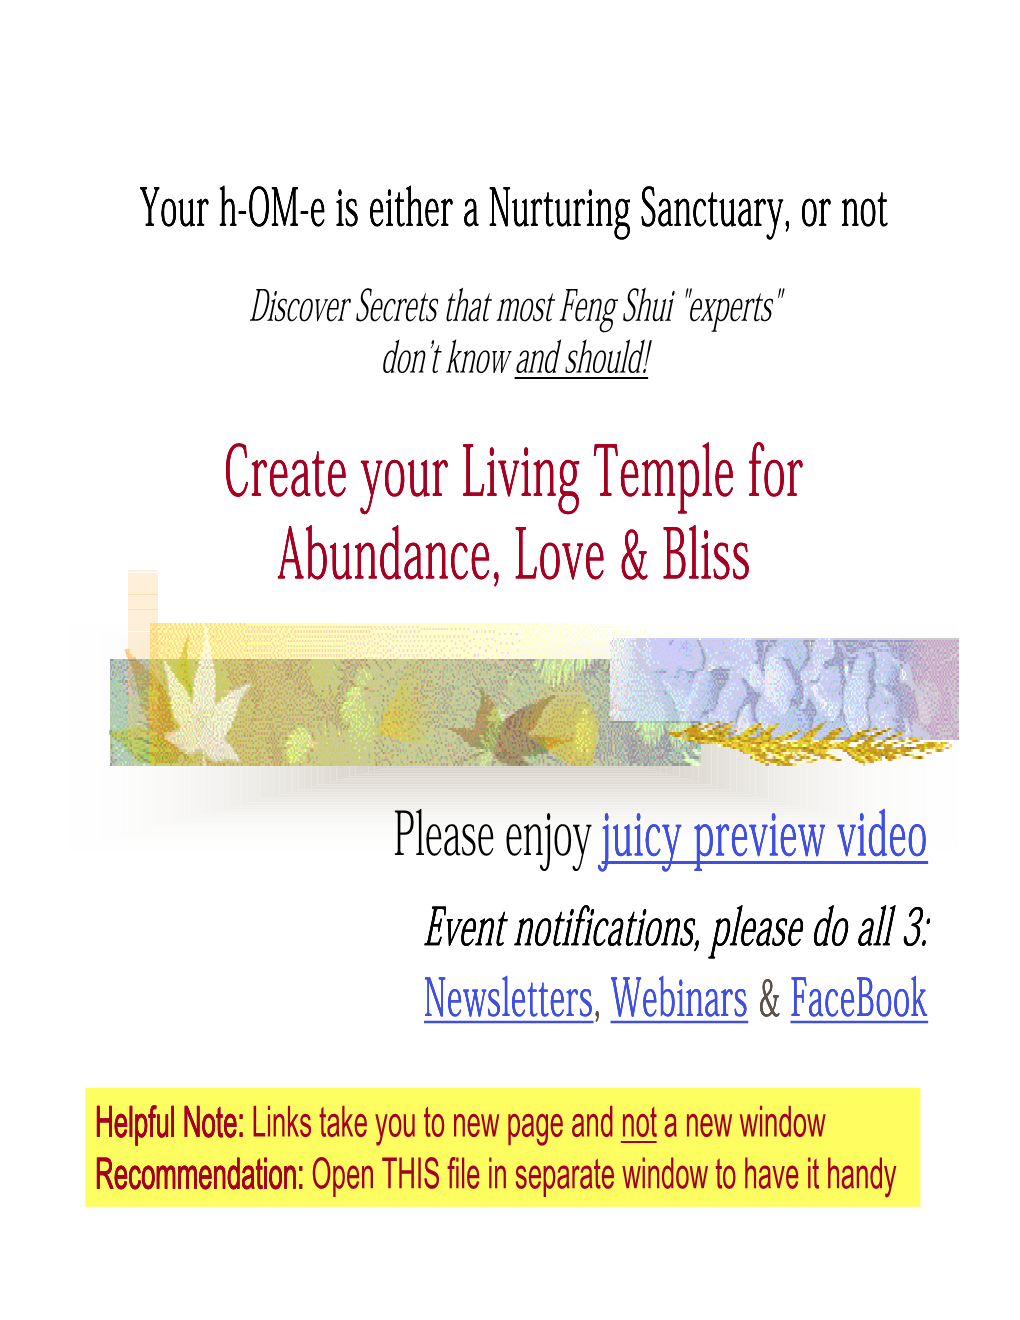 Create Your Living Temple for Abundance, Love & Bliss